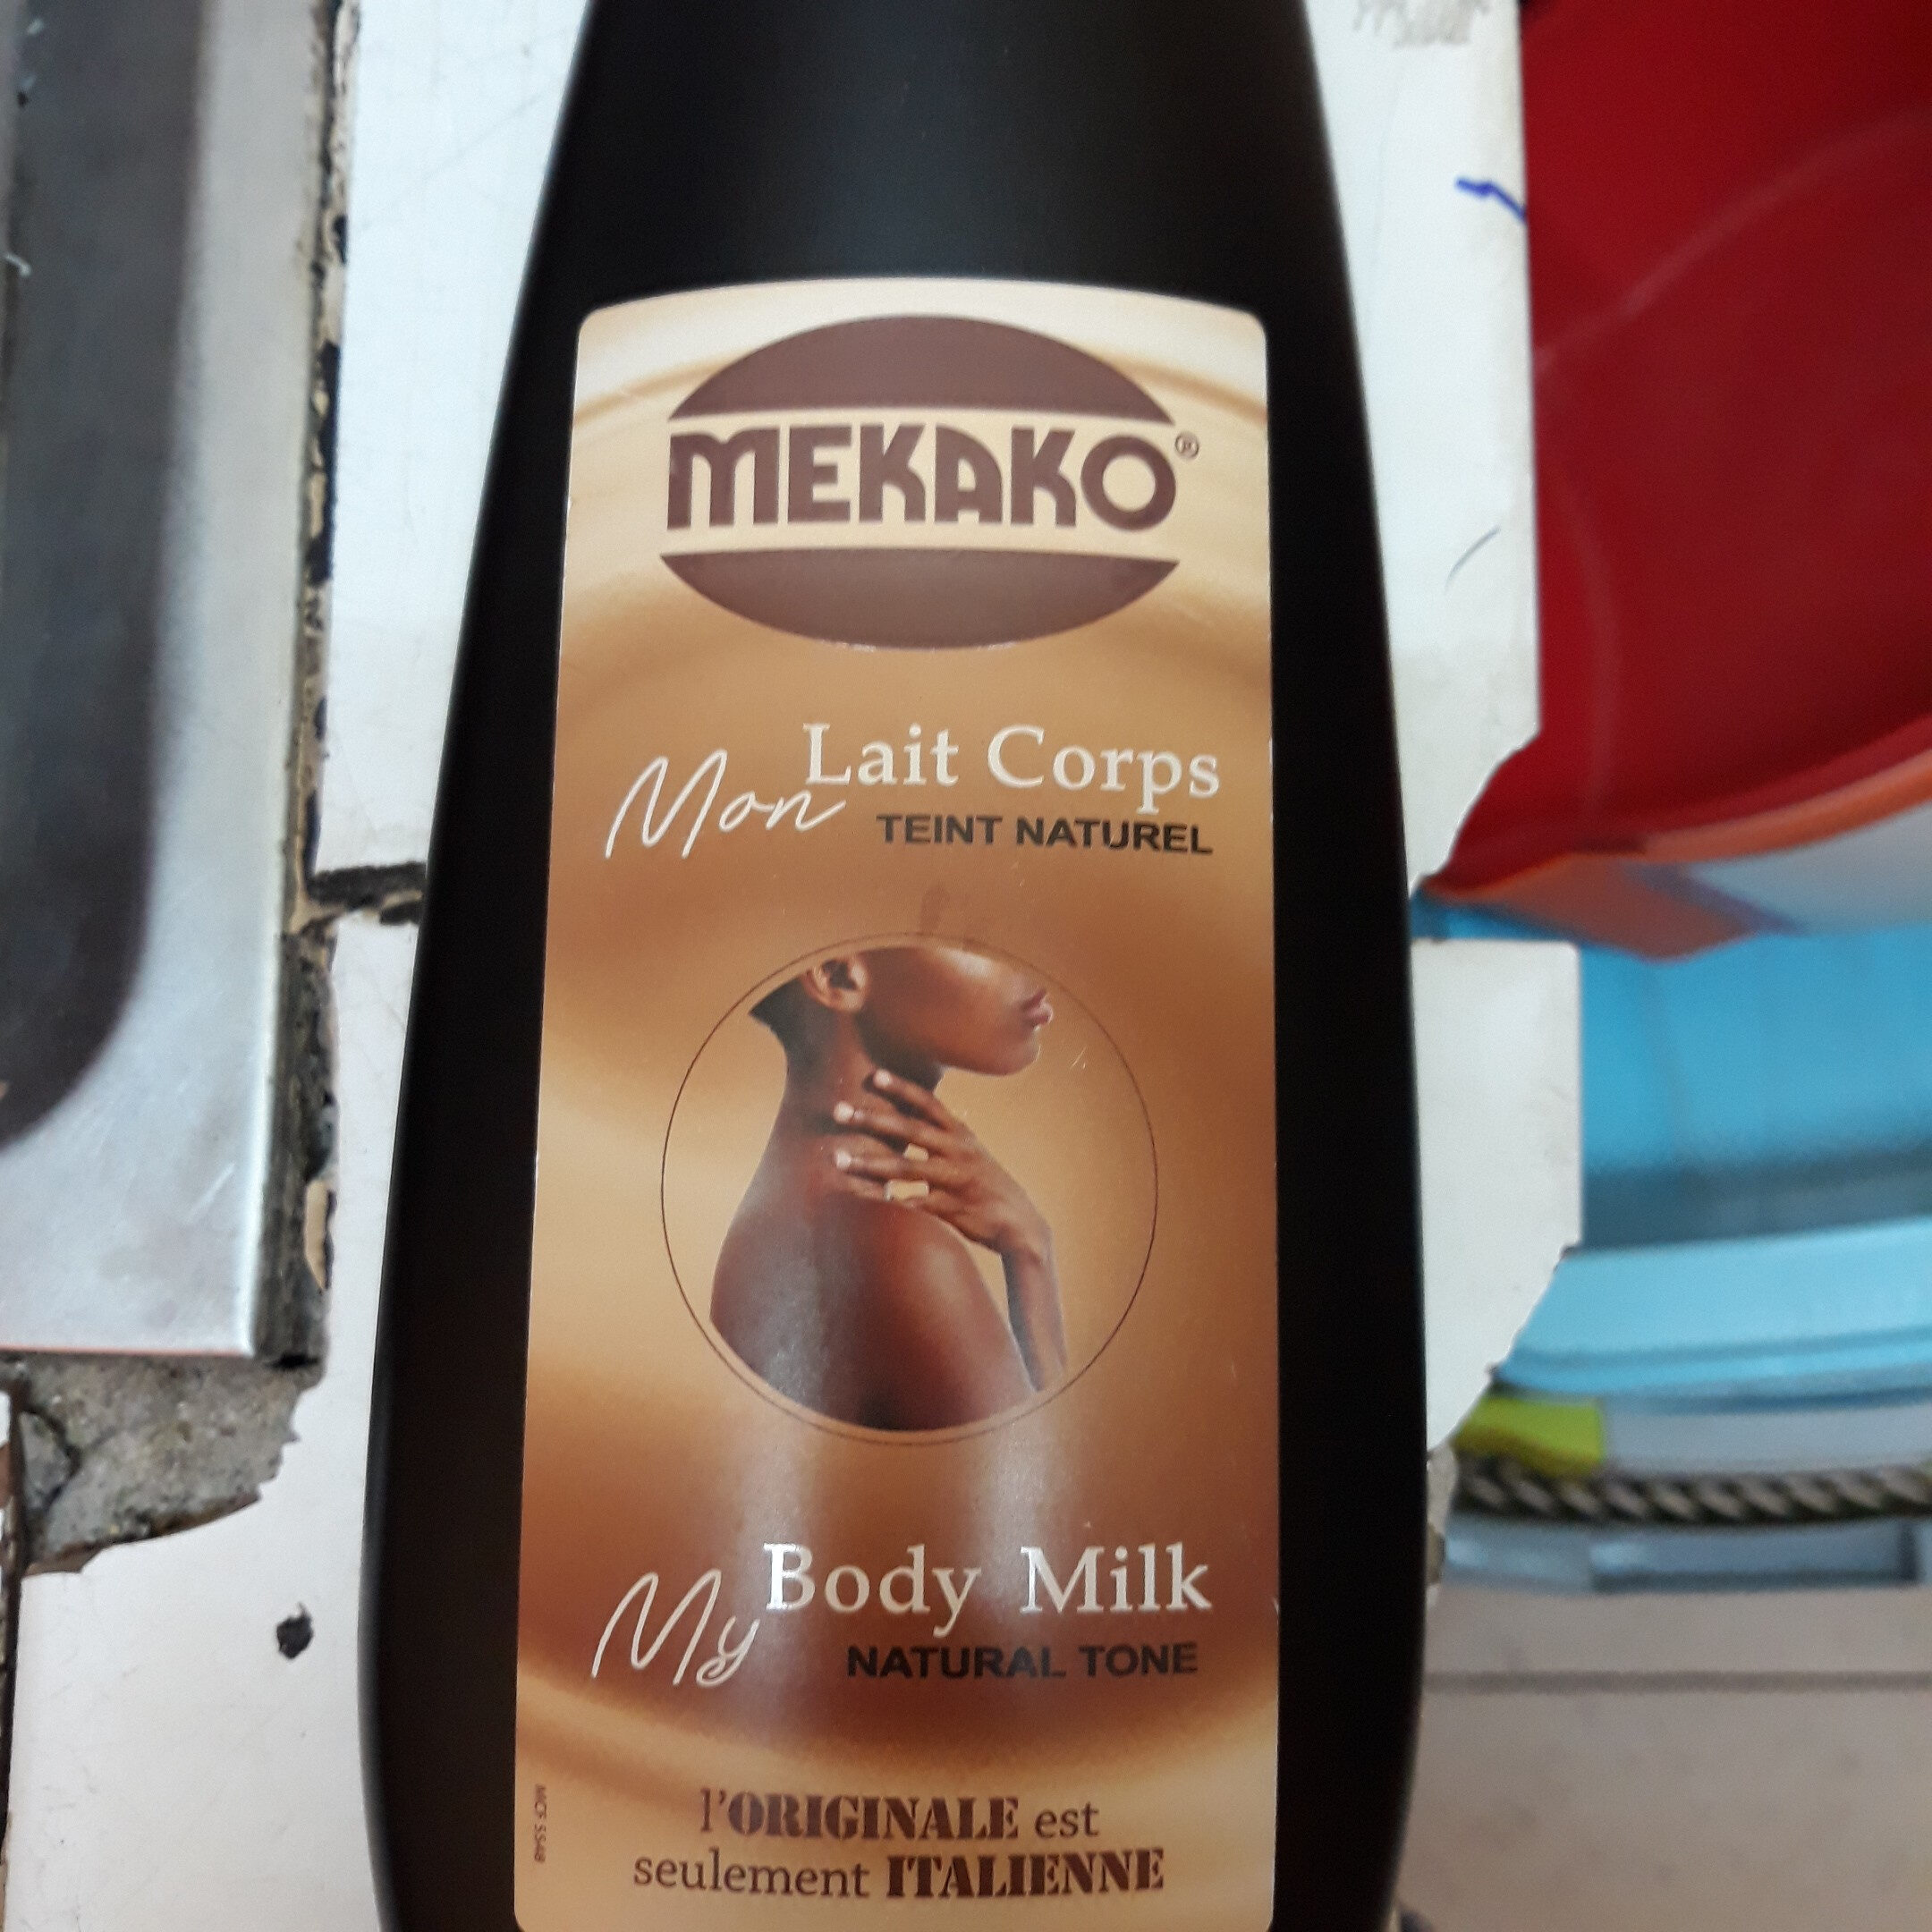 mekako lait corps mon teint naturel - Product - fr